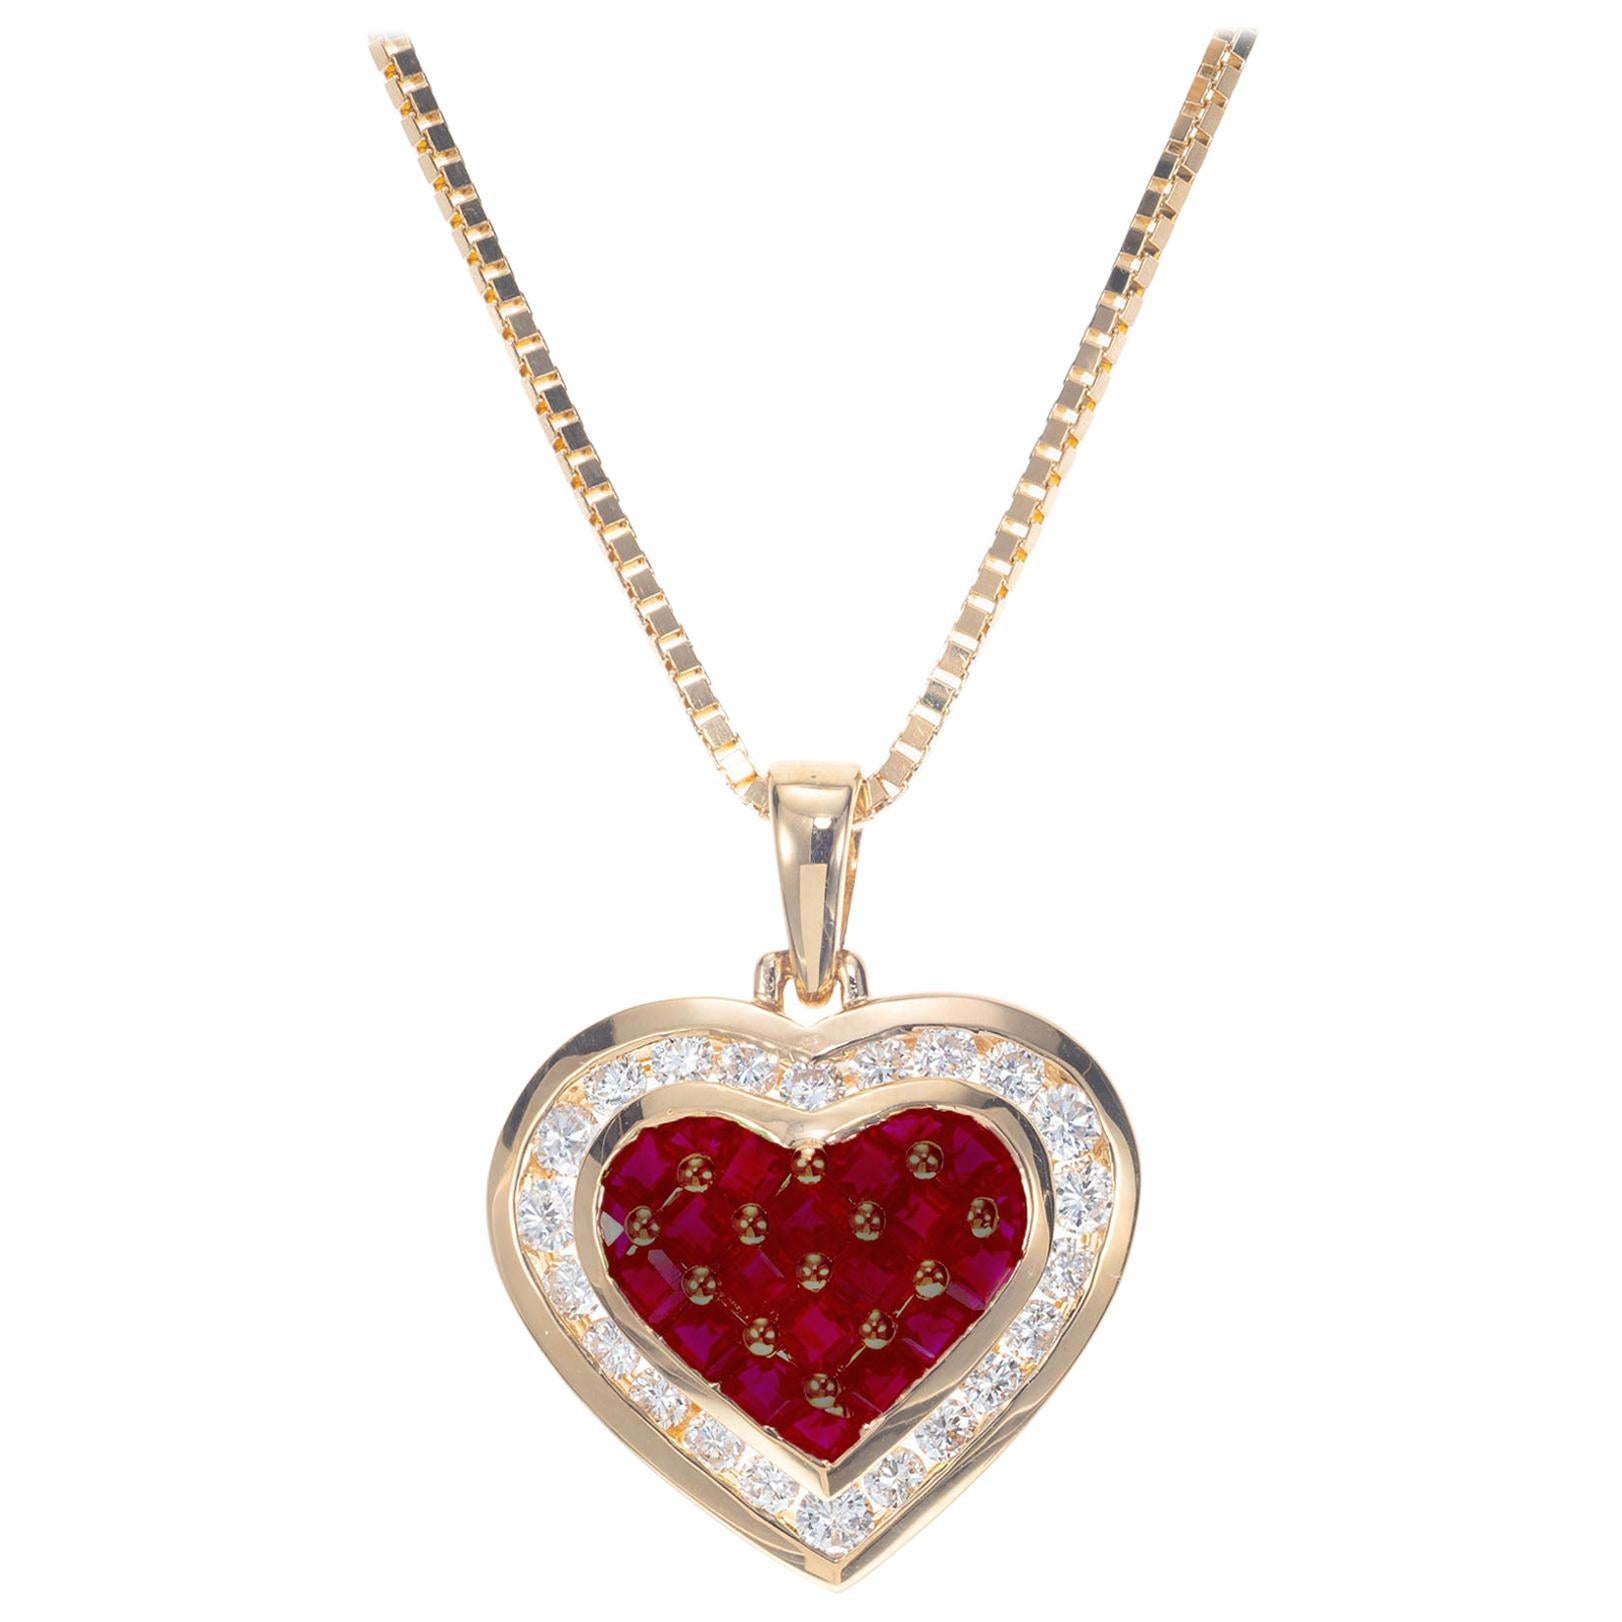 .55 Carat Ruby Diamond Yellow Gold Heart Shape Pendant Necklace